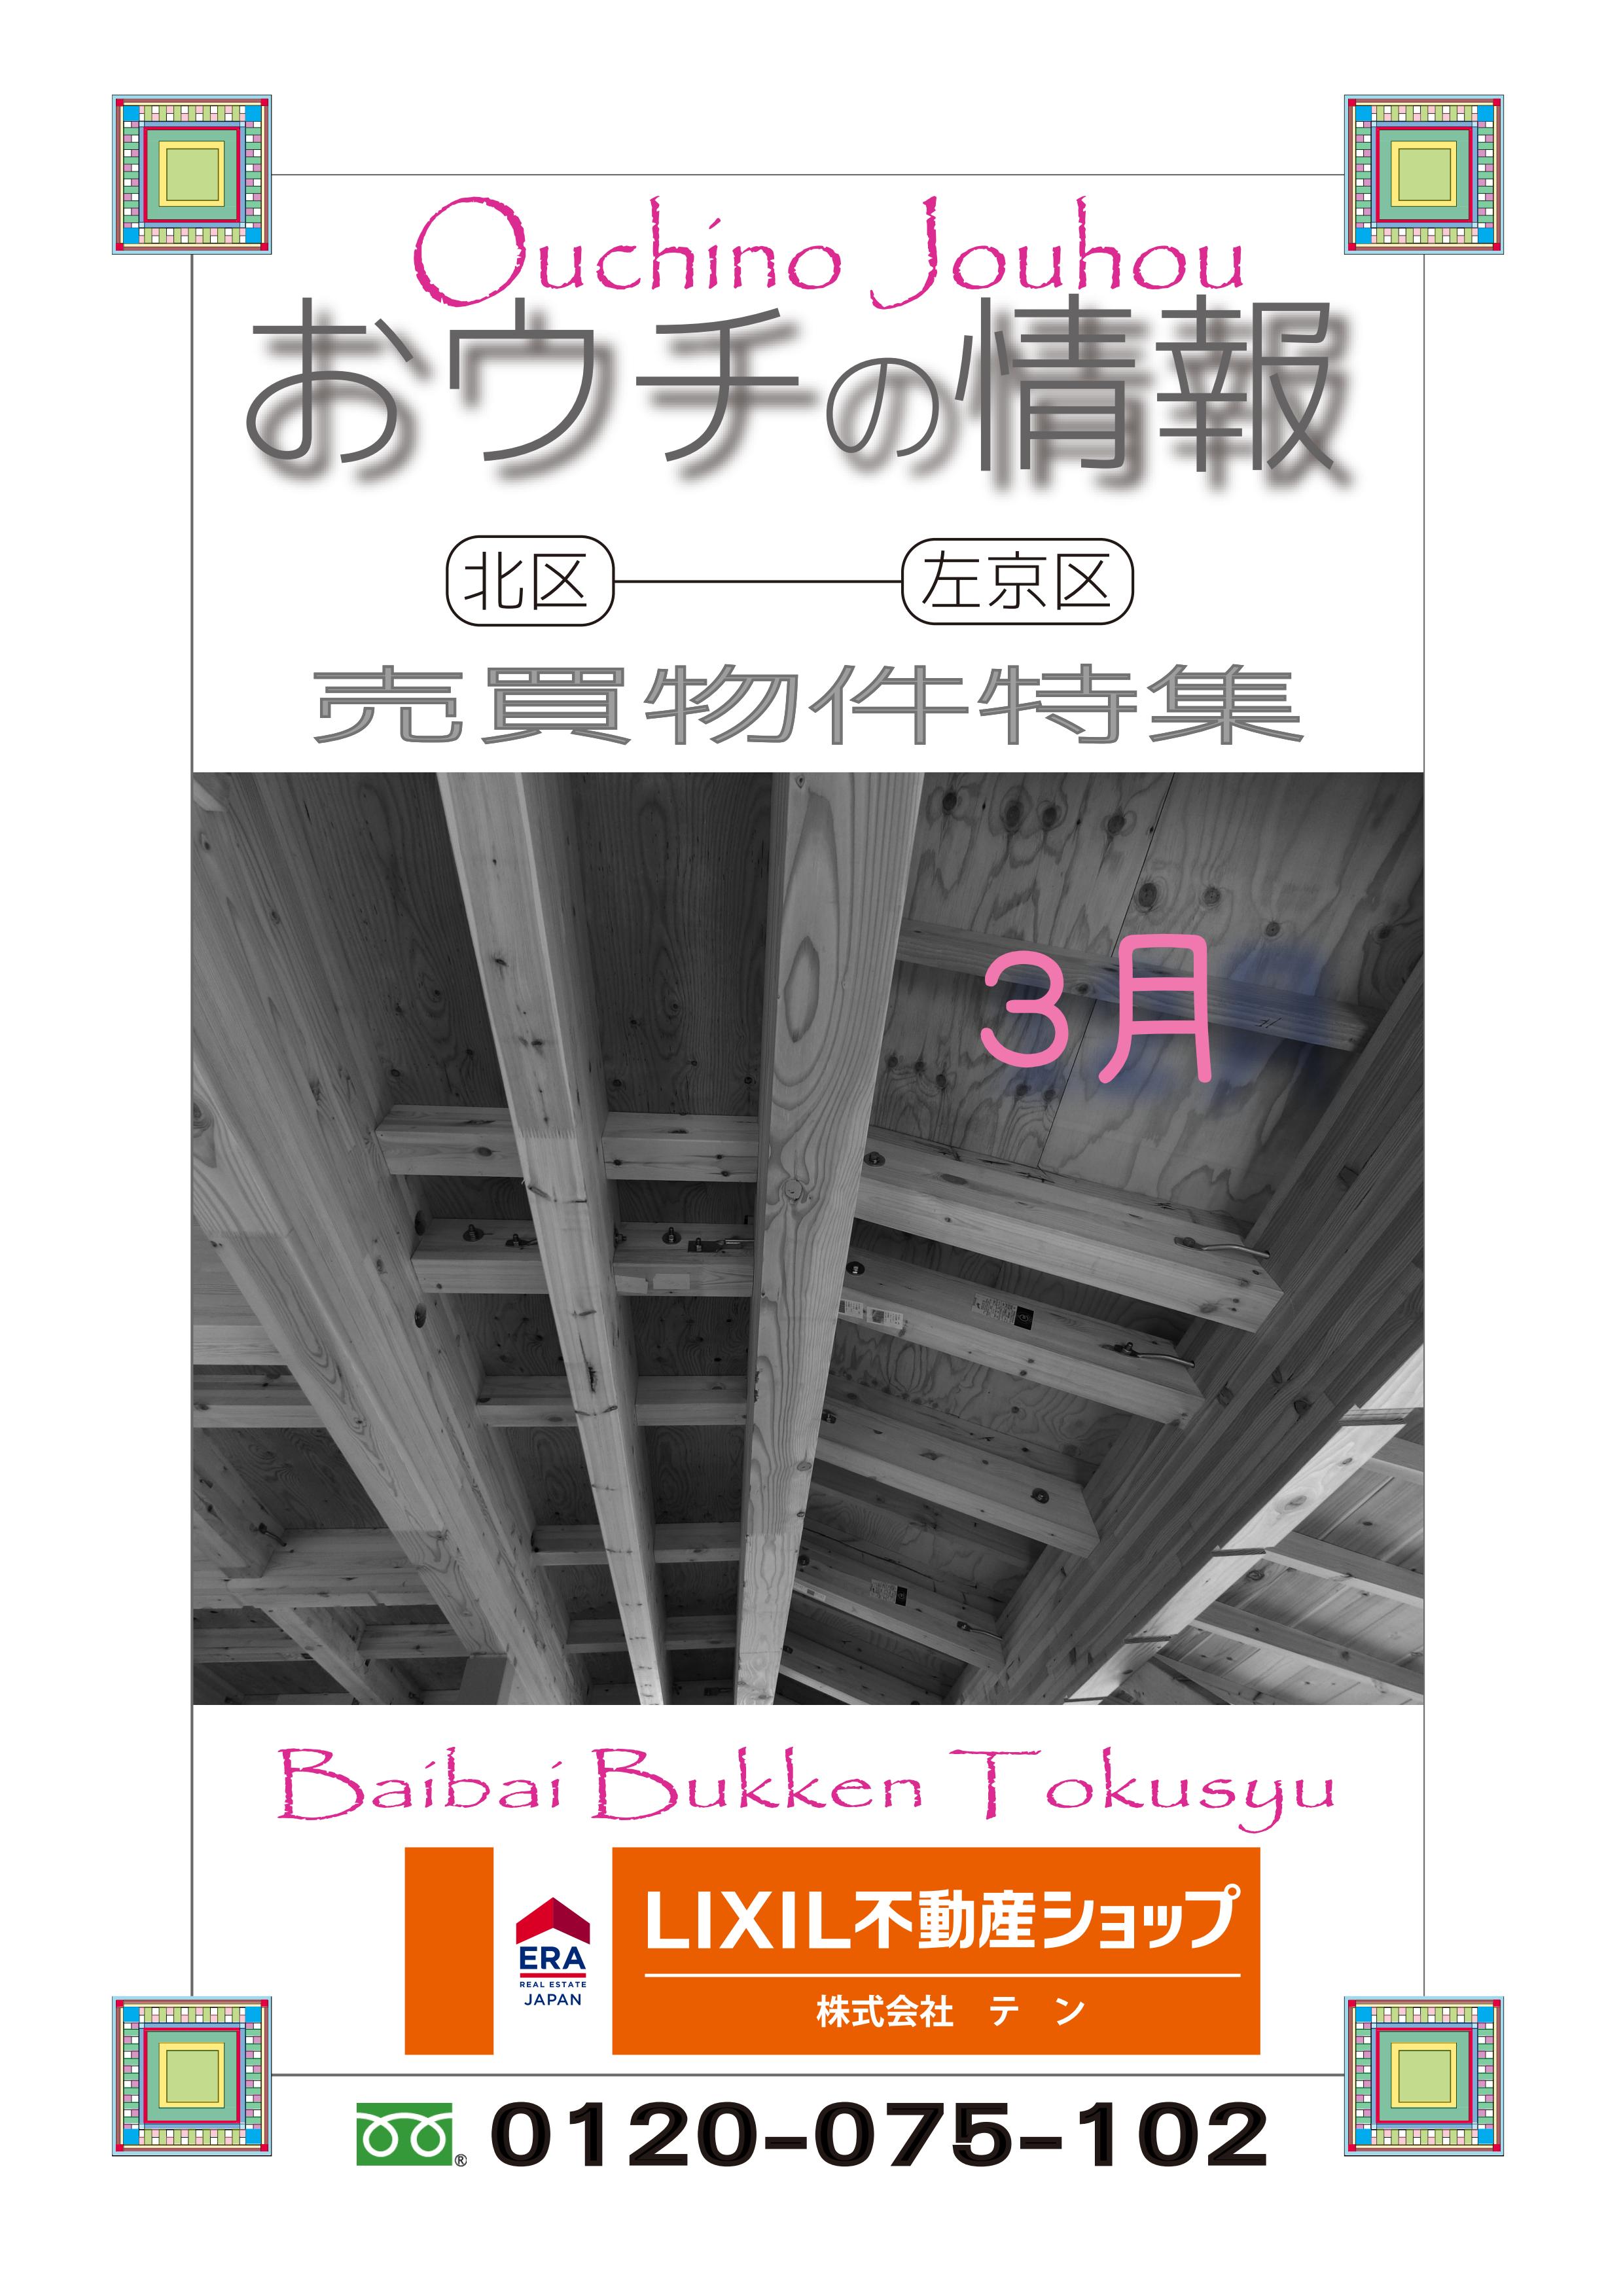 http://www.eraten.jp/blog/images/news/3%E6%9C%88%E5%8F%B7.jpg